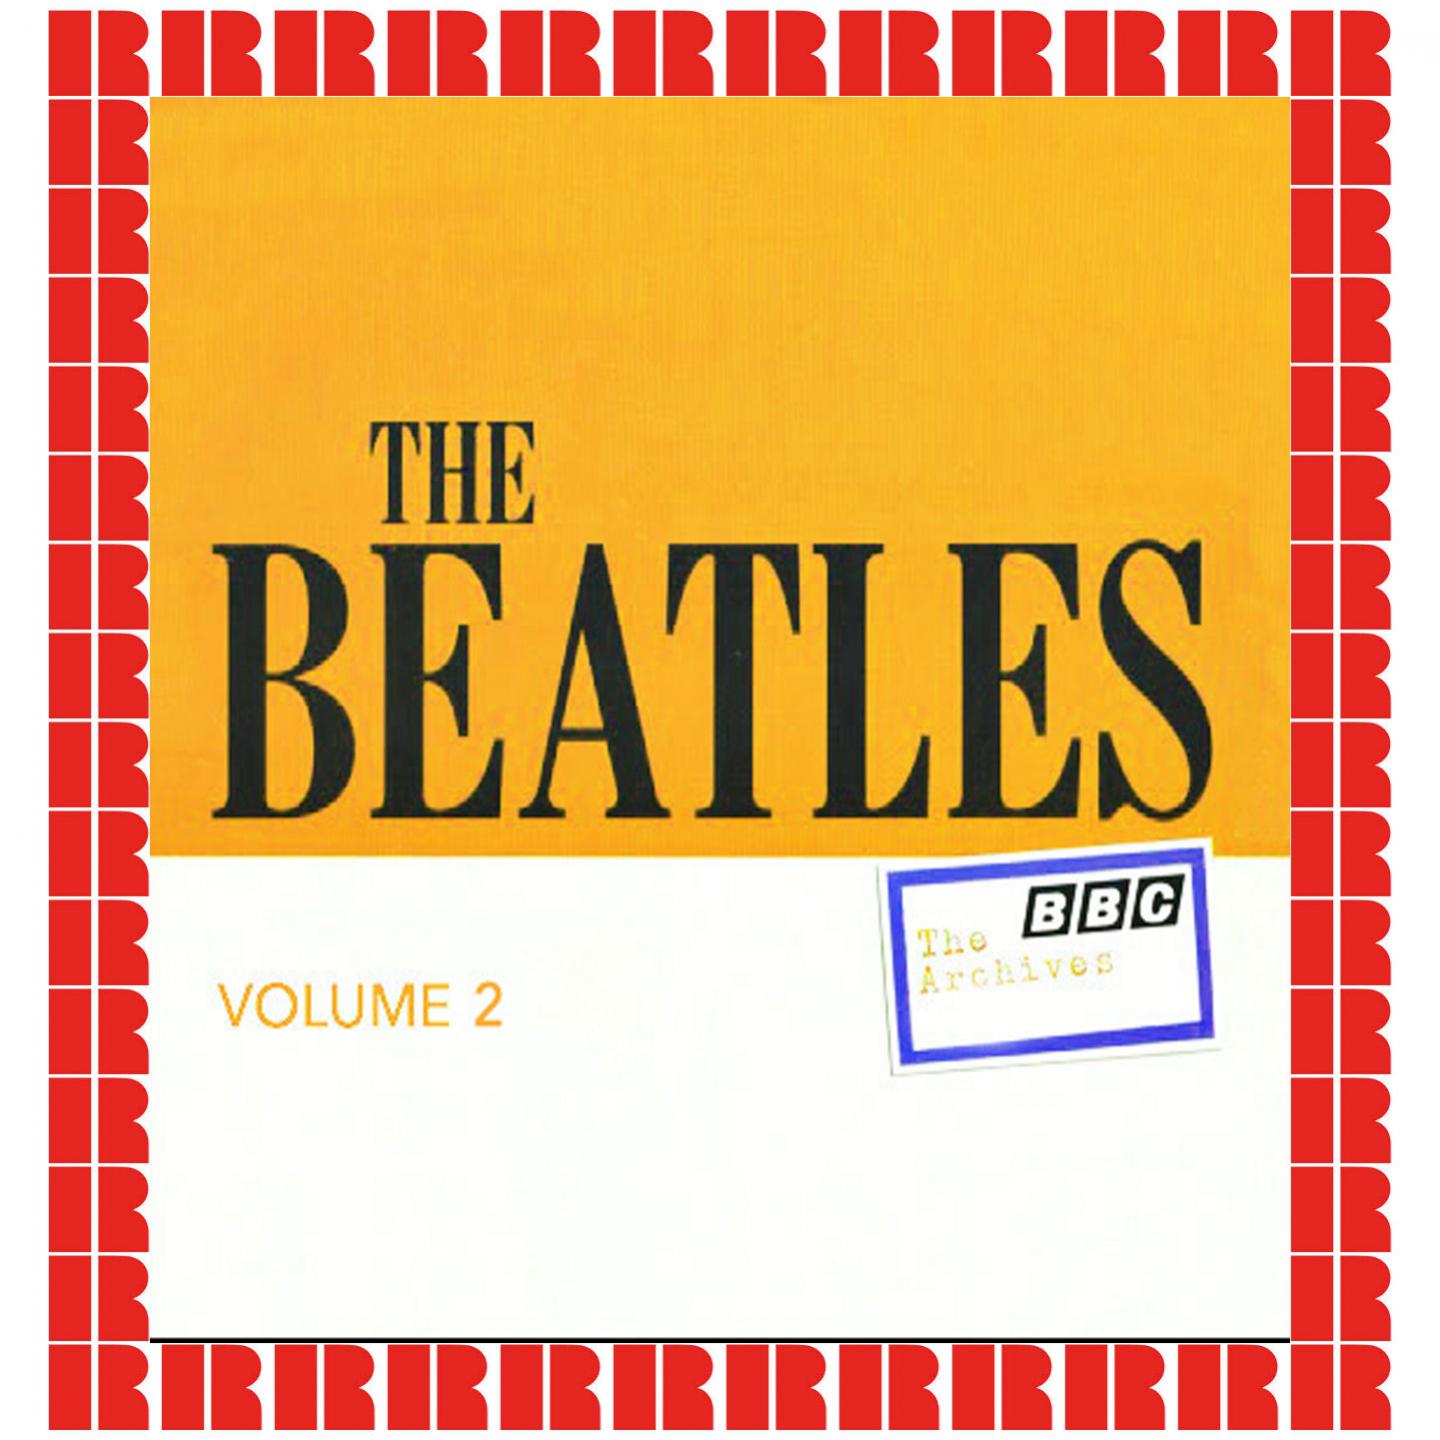 Baby It's You - June 1, 1963 (Pop Go To The Beatles #2)